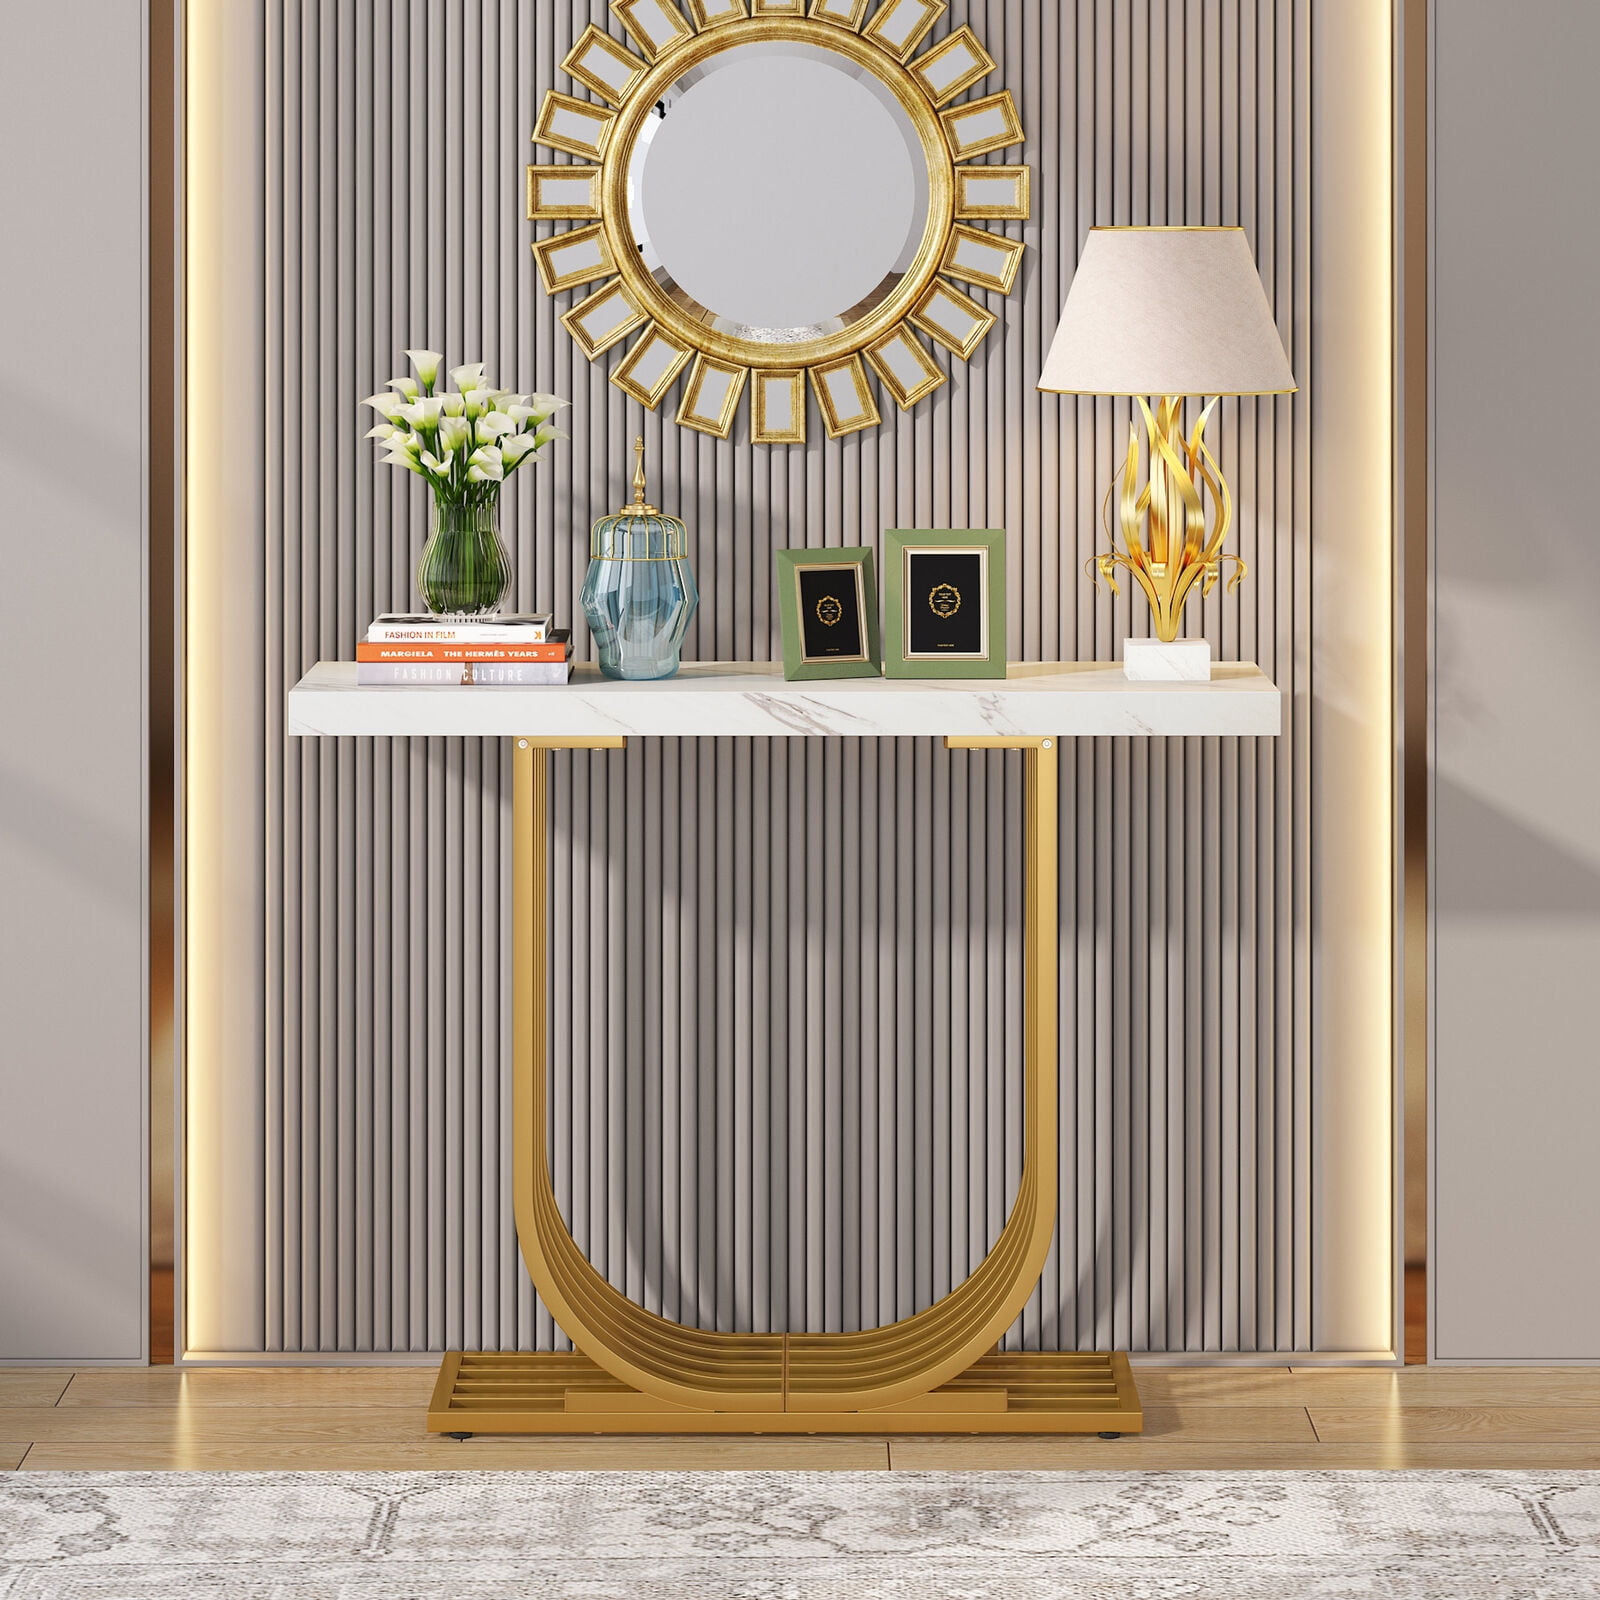 Gold Metallic Peacock Mirror with Gray Console Table - Contemporary -  Entrance/foyer